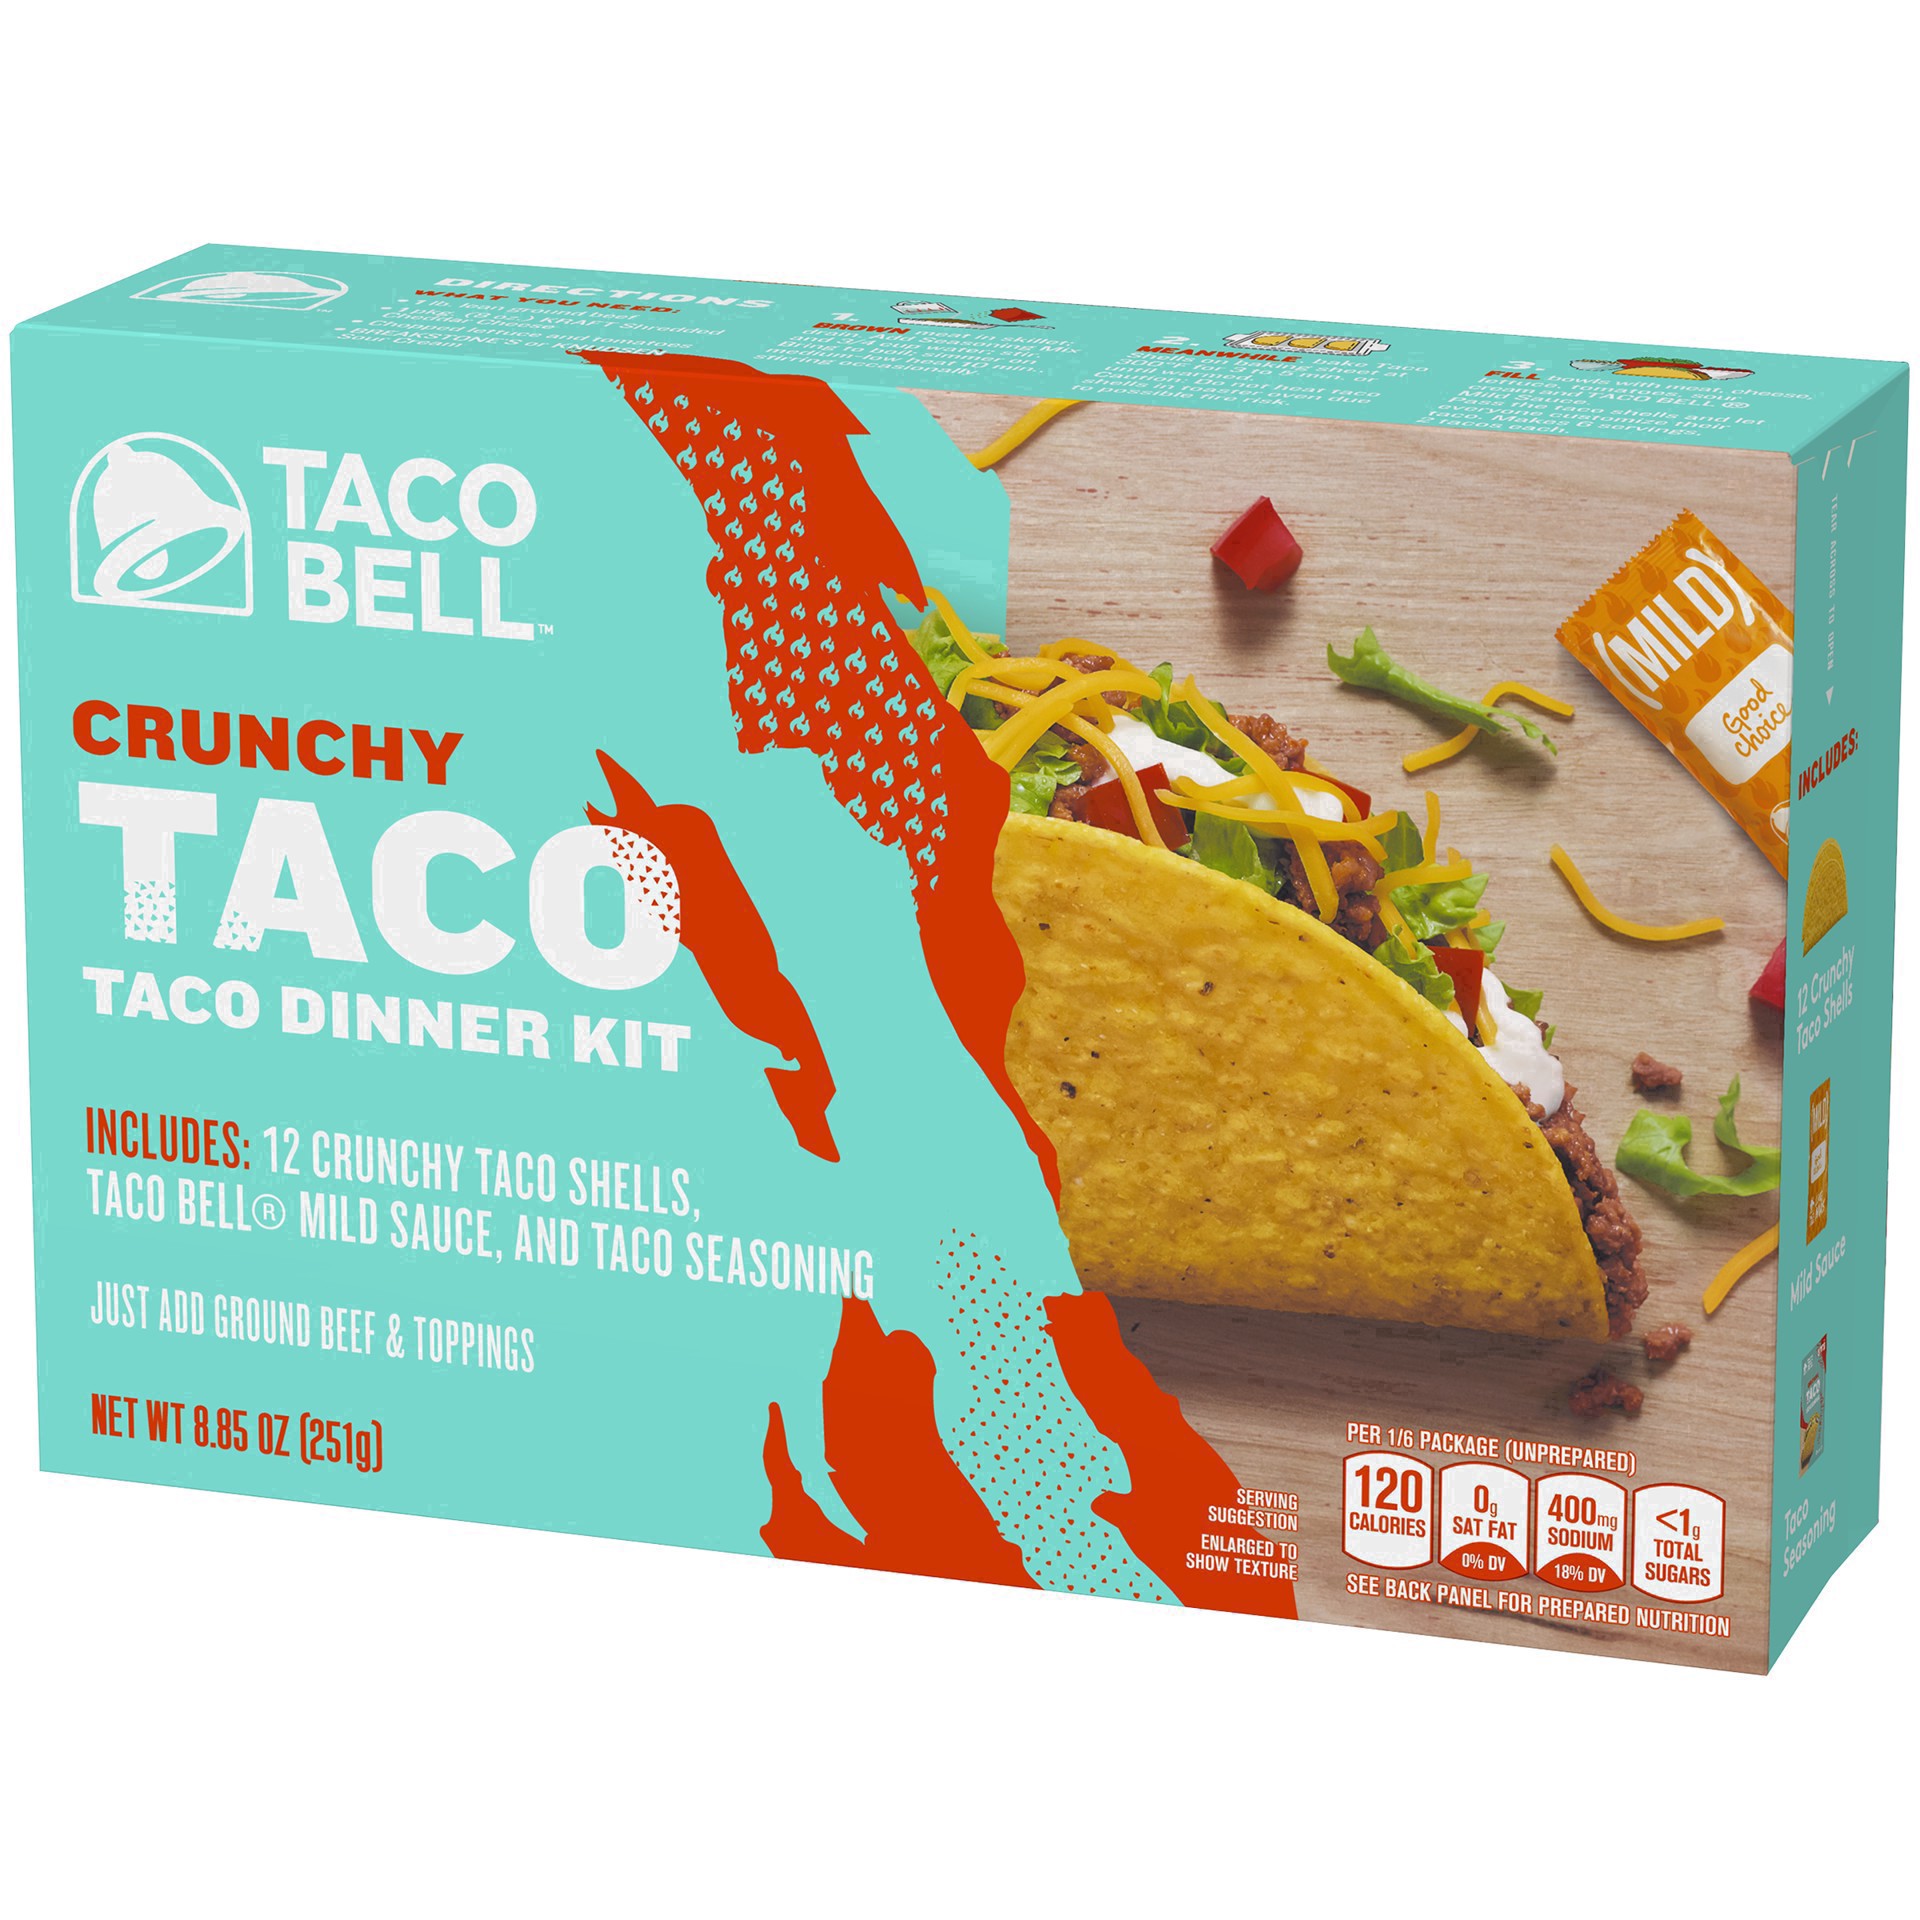 slide 4 of 91, Taco Bell Crunchy Taco Cravings Kit with 12 Crunchy Taco Shells, Taco Bell Mild Sauce & Seasoning, 8.85 oz Box, 1 ct